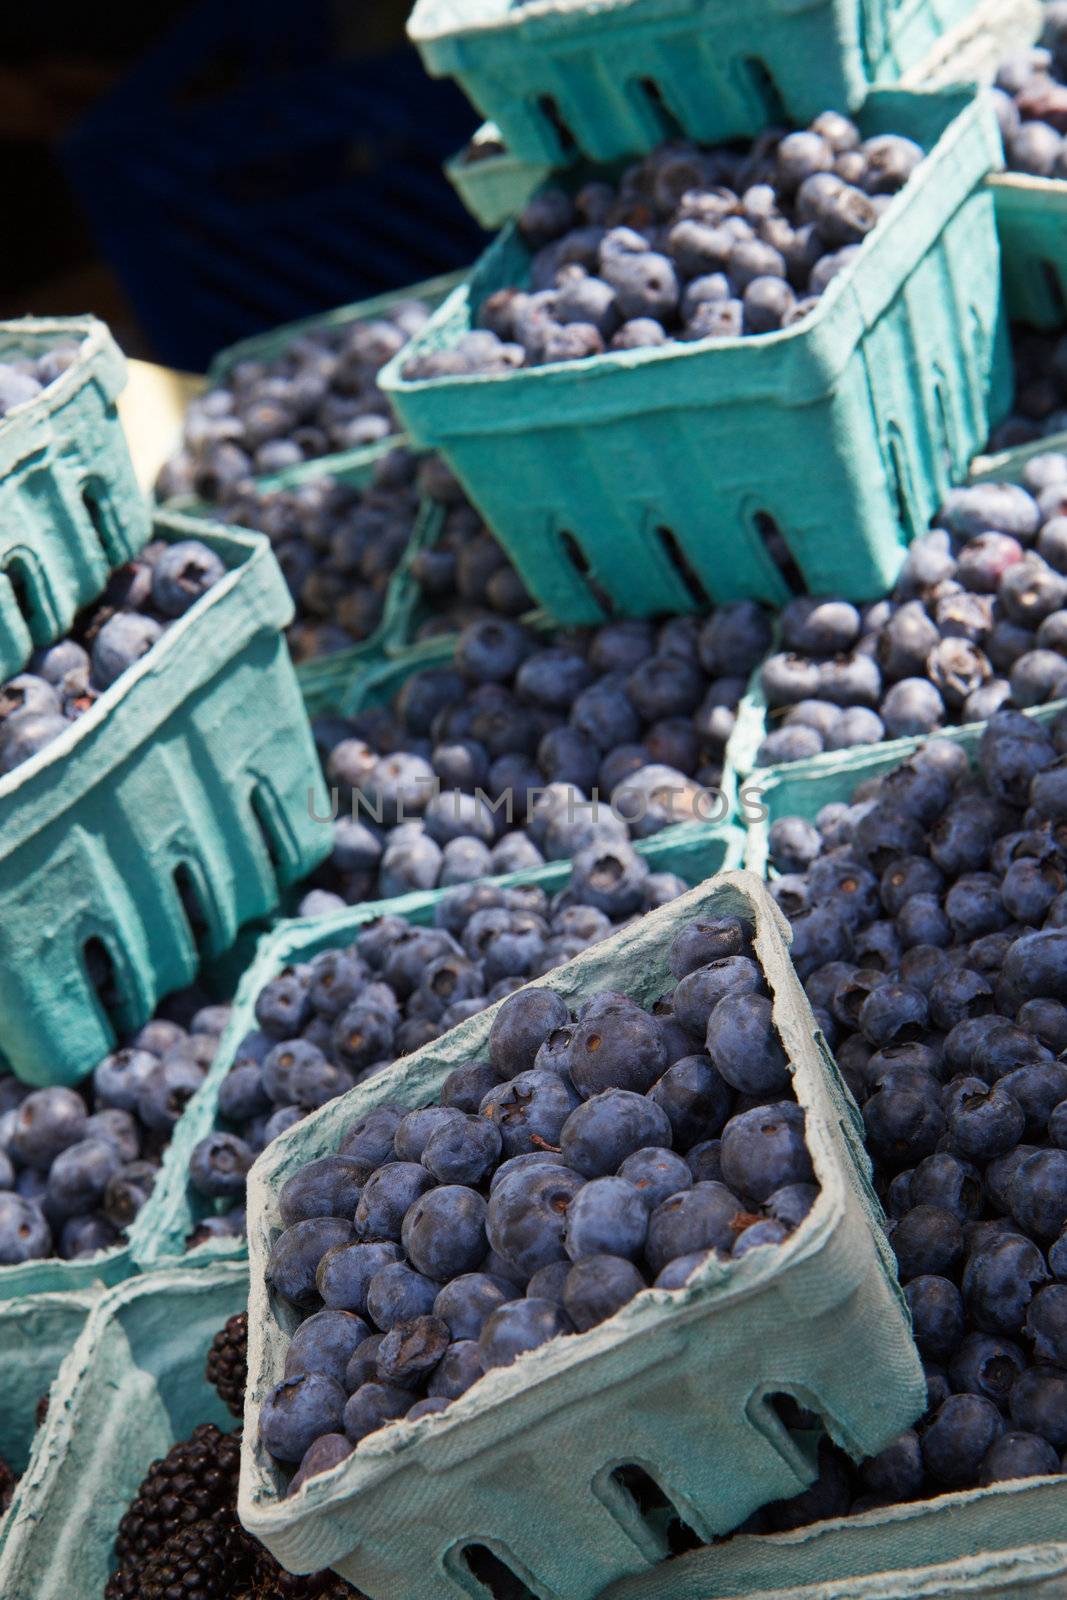 Blueberry cartons by bobkeenan